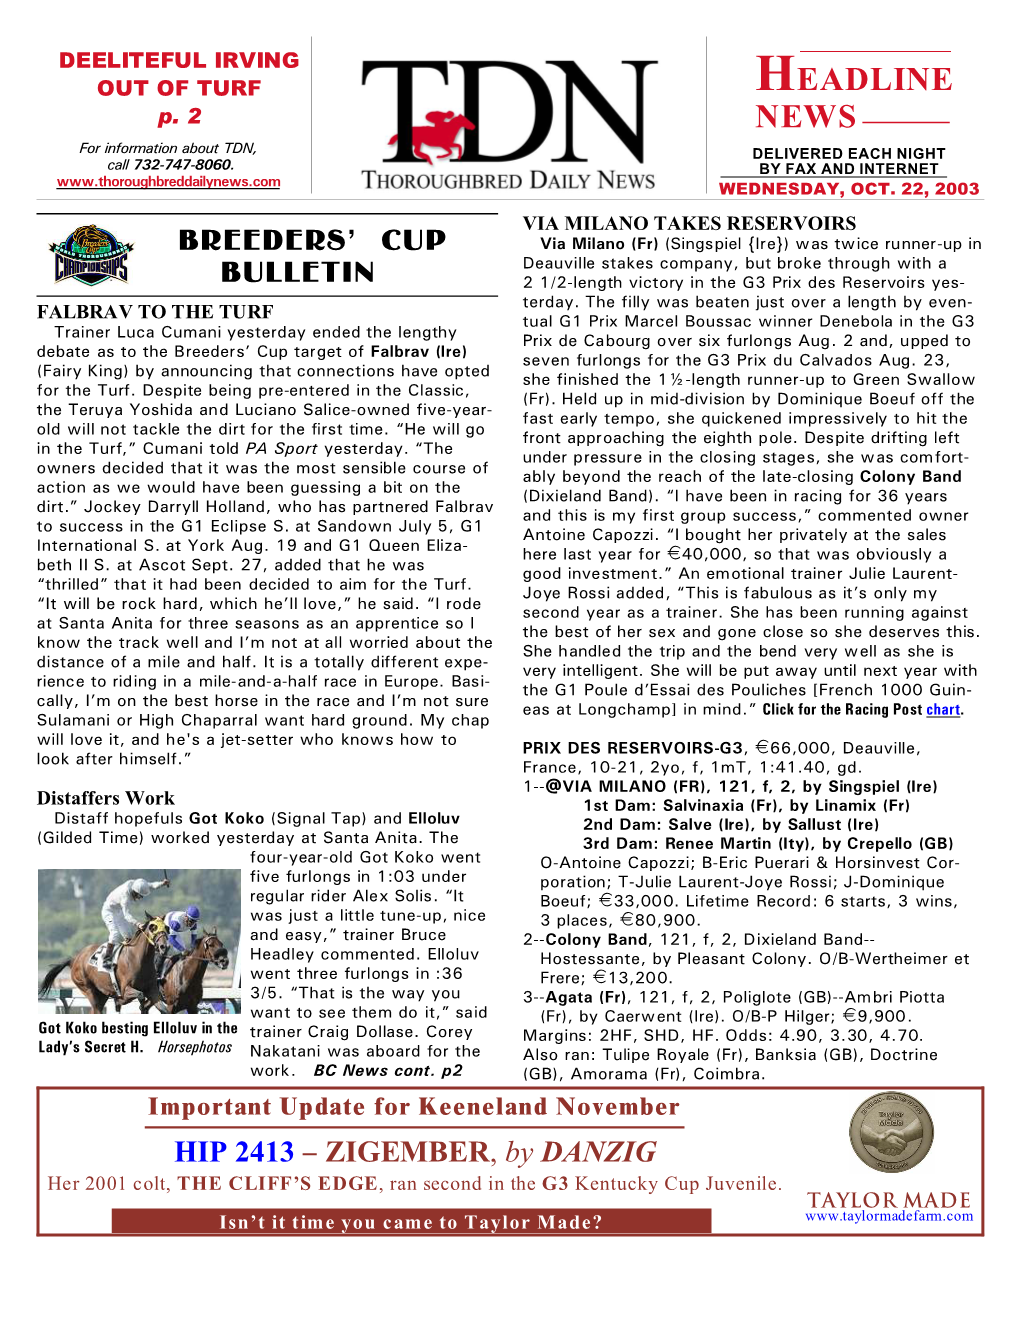 HEADLINE NEWS • 10/22/03 • PAGE 2 of 6